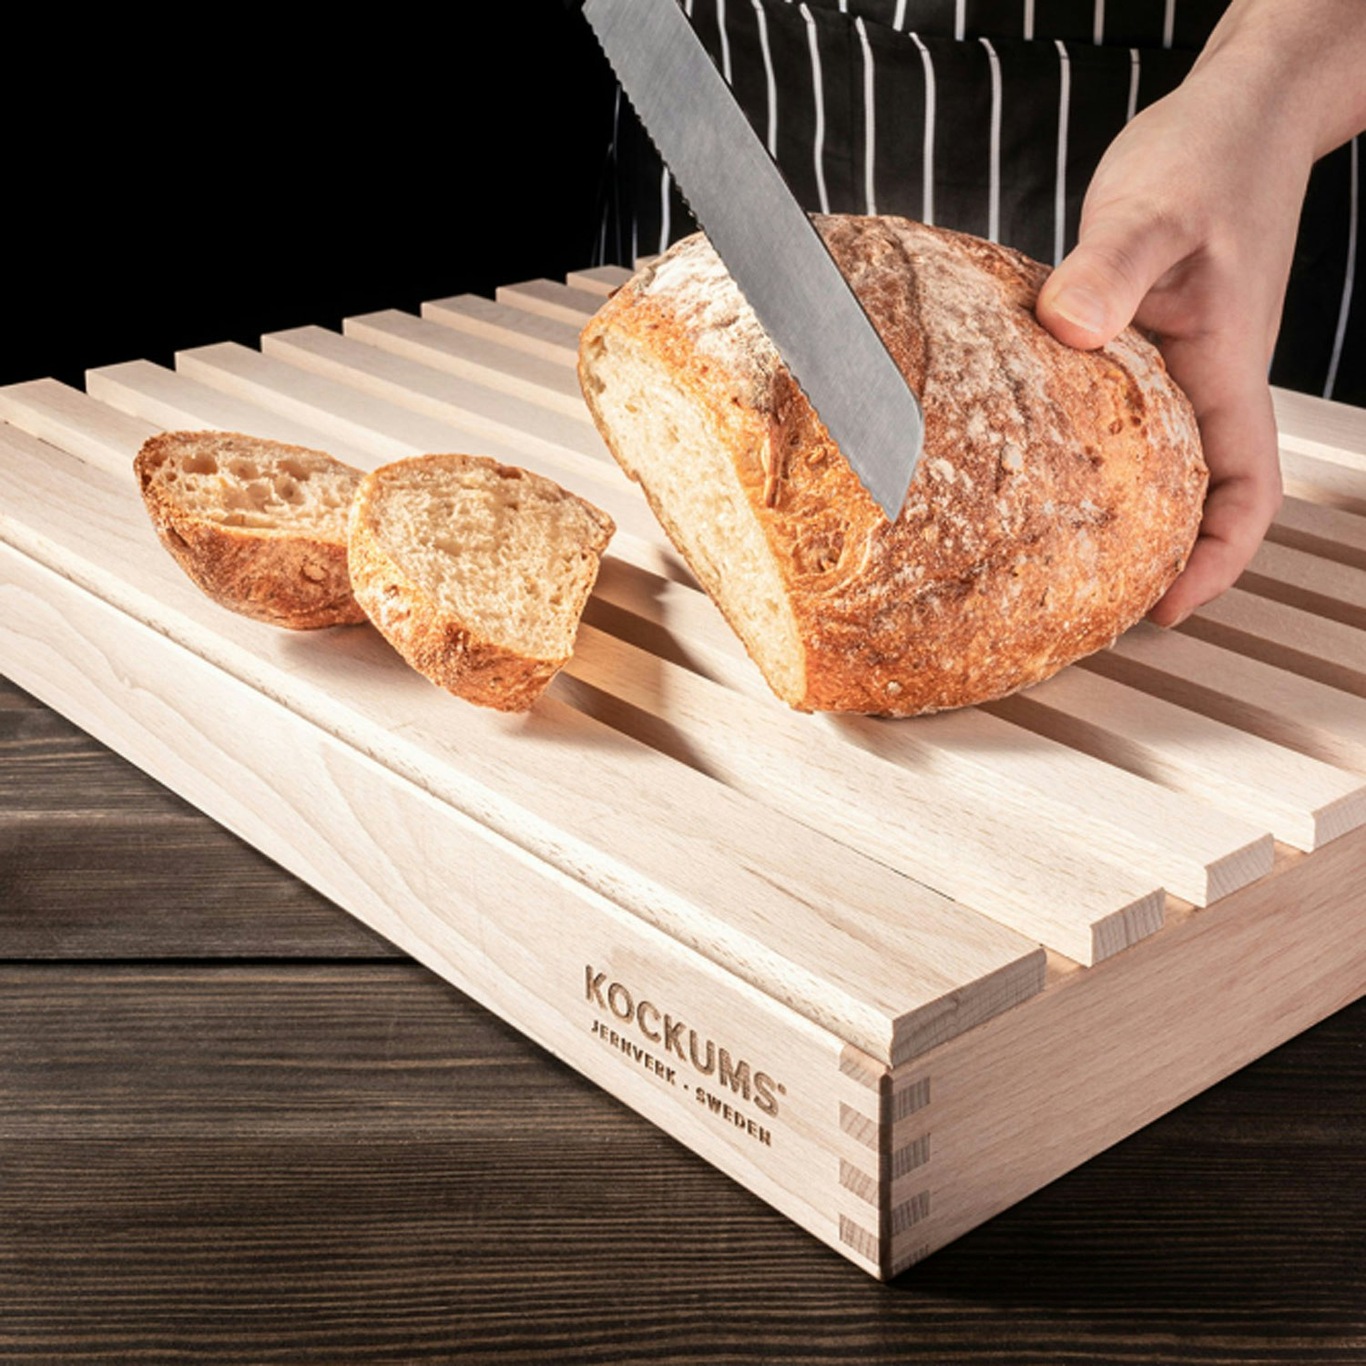 https://royaldesign.com/image/2/kockums-jernverk-cutting-board-for-bread-48x38-cm-2?w=800&quality=80